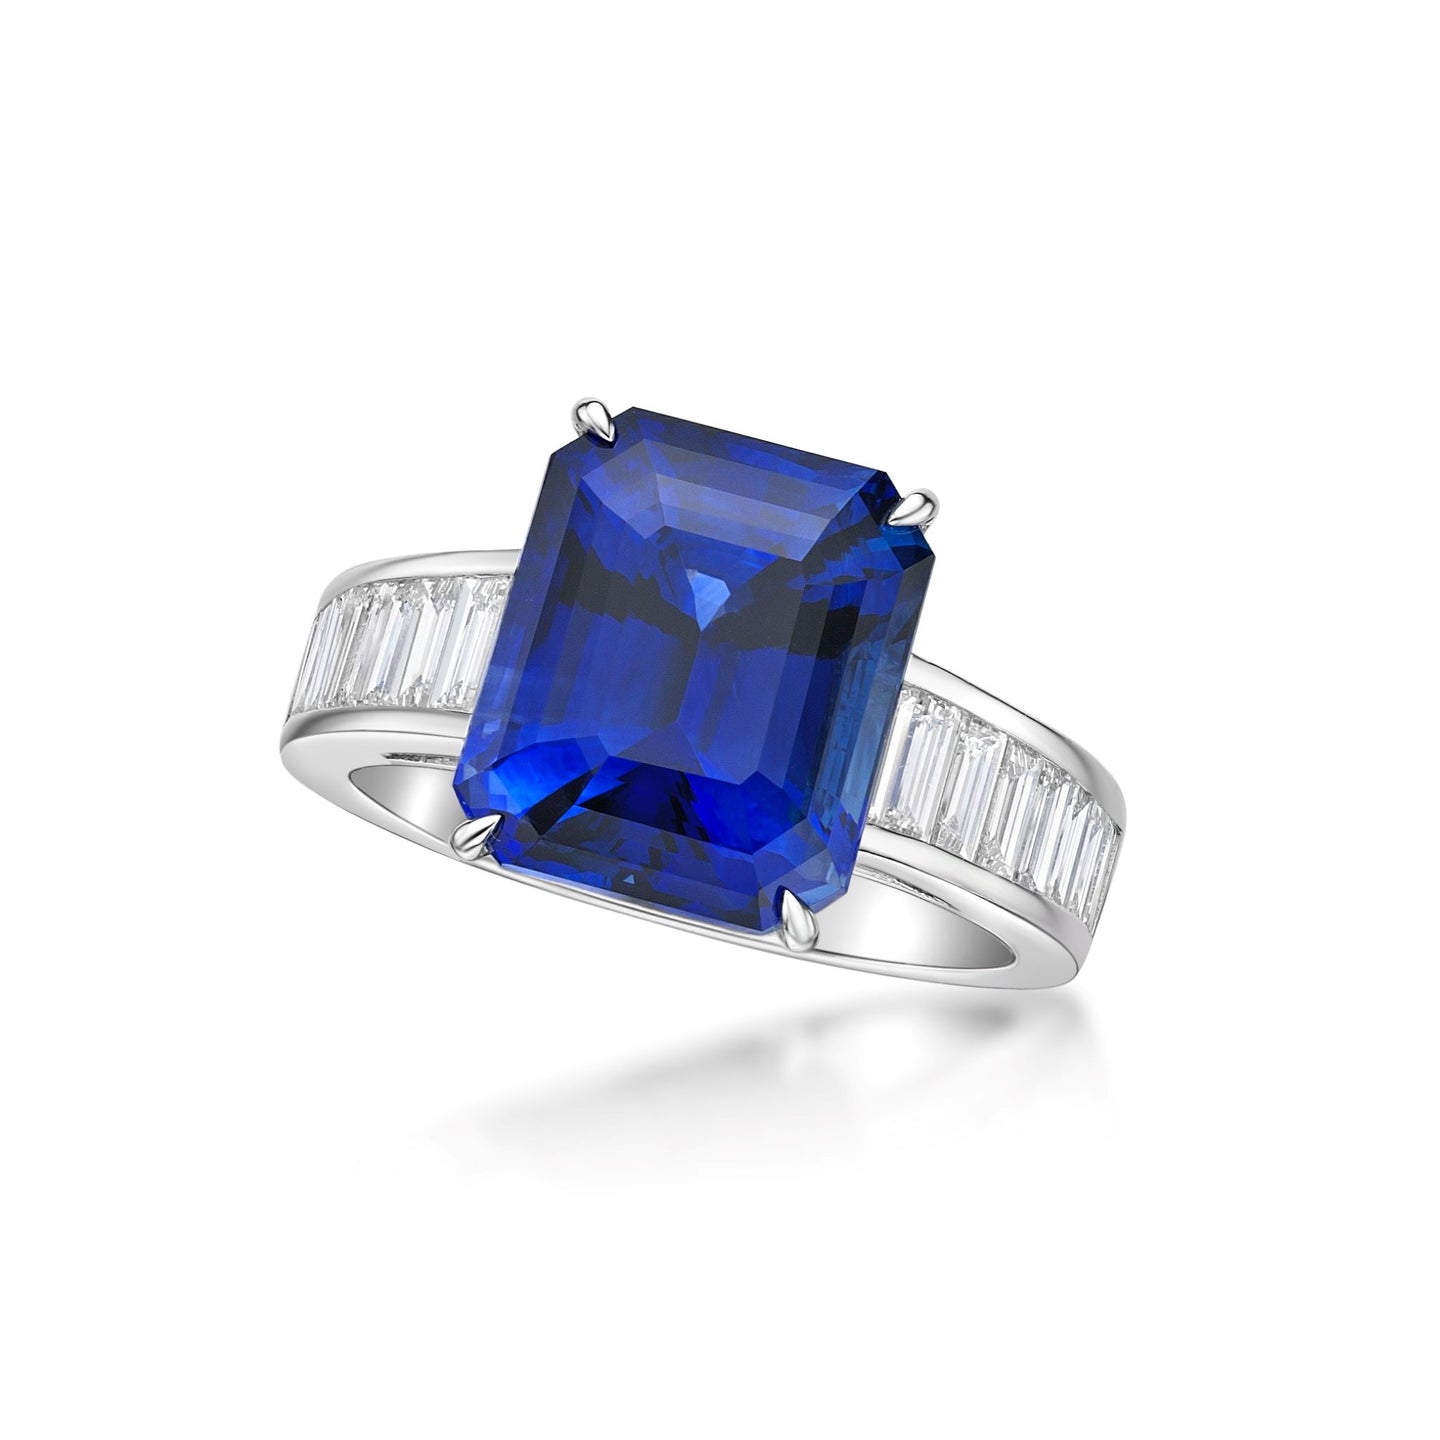 Blue Sapphire White Diamond Ring